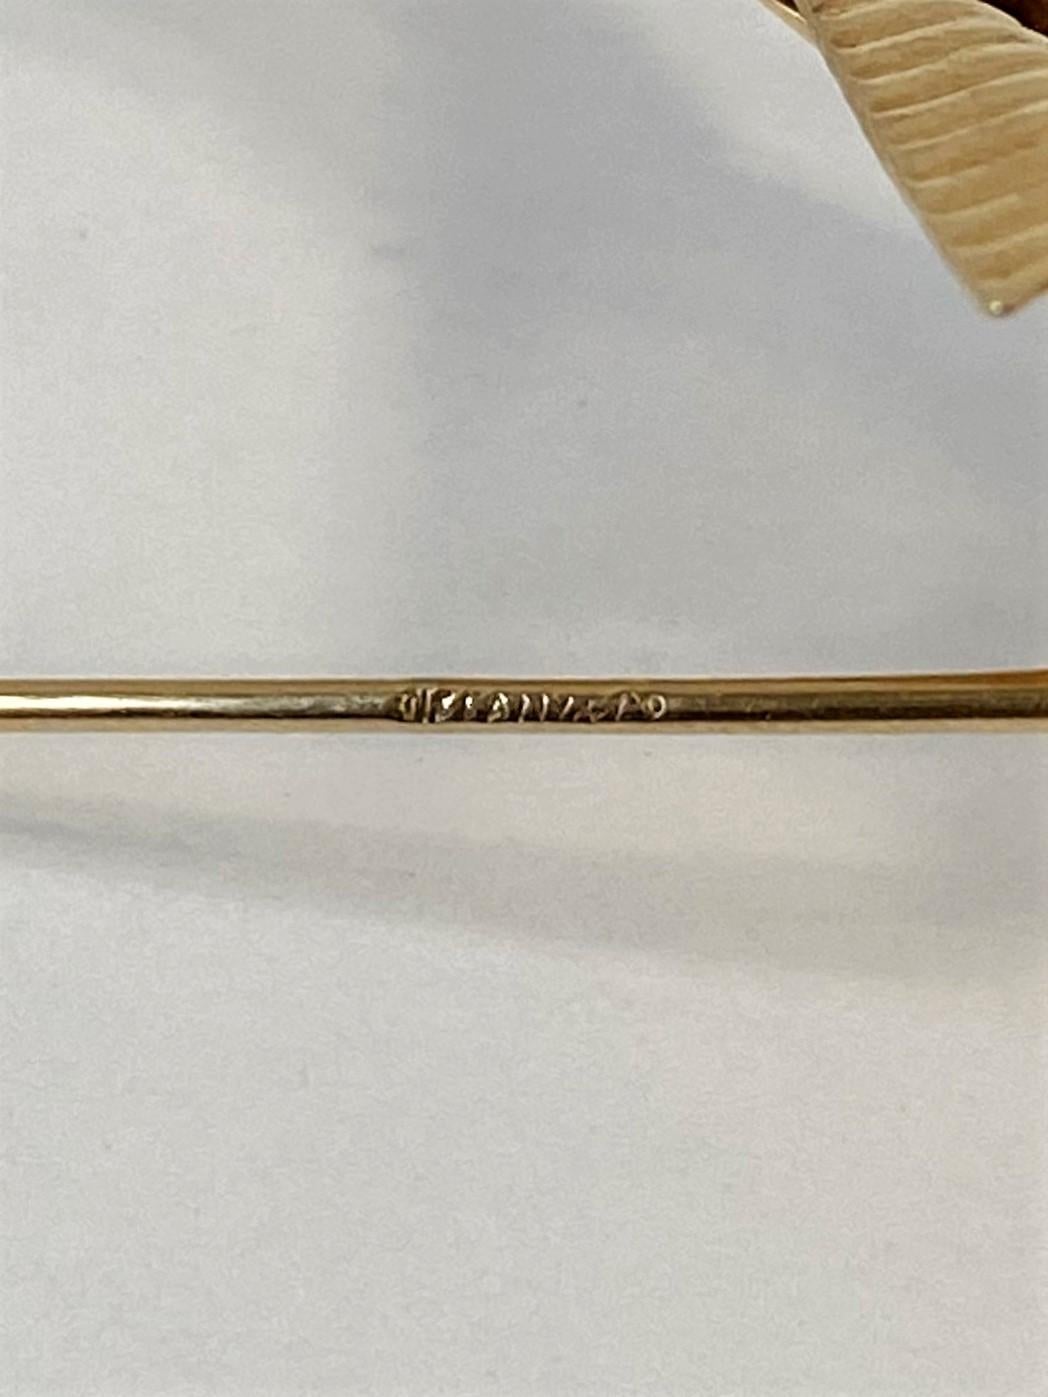 Tiffany & Co. 14-Karat Yellow Gold Bow Pin Brooch 5